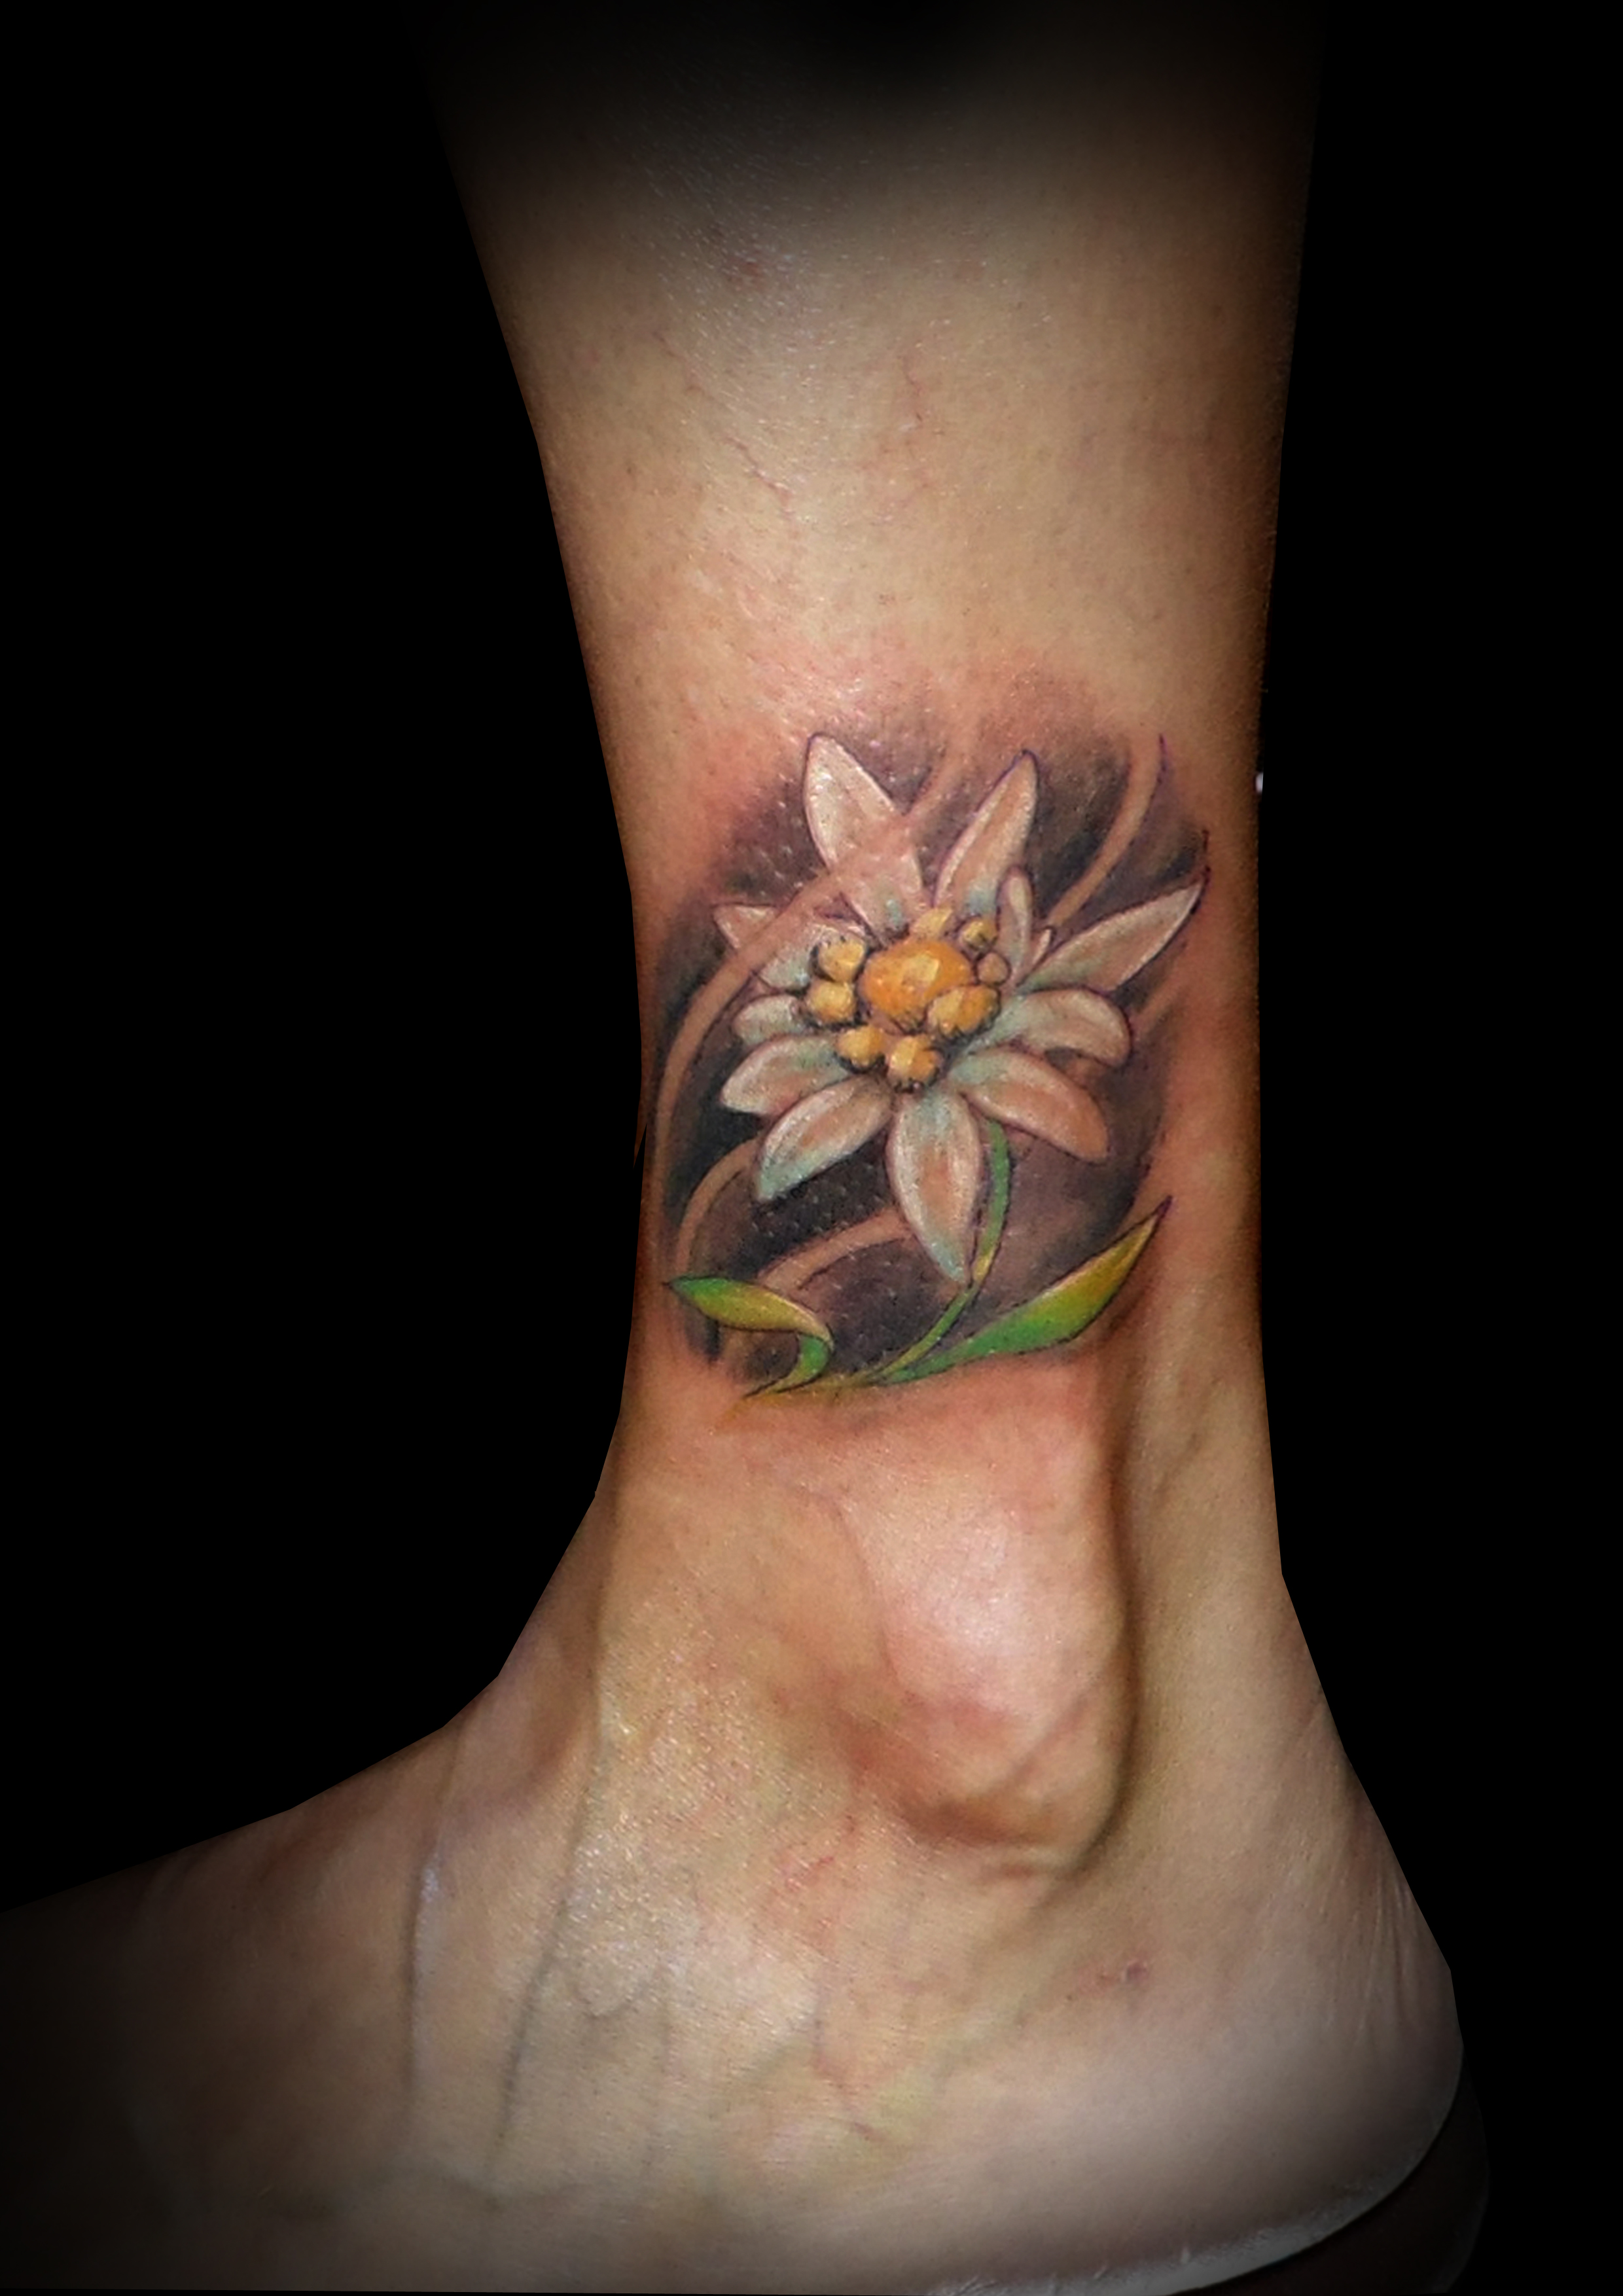 tatuaje flor tobillo edelweiss color sombras flor nieve 13depicas